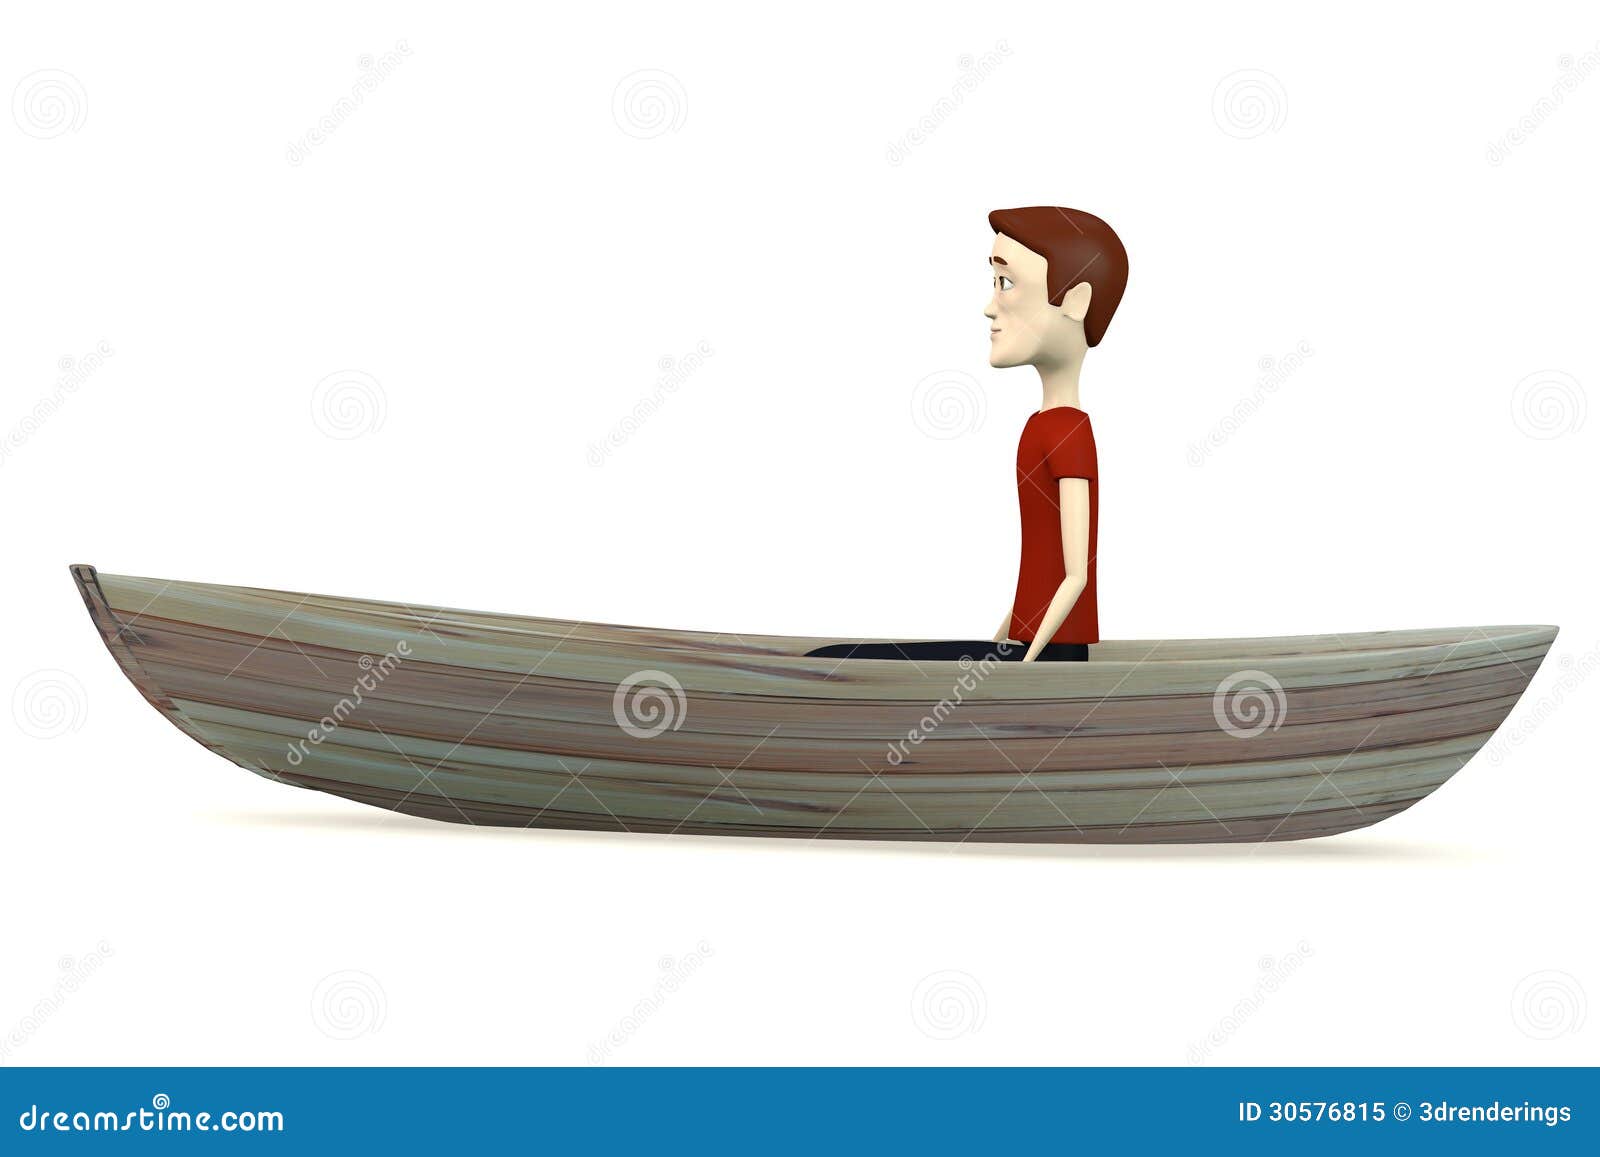 Cartoon Man On Boat Royalty Free Stock Photo - Image: 30576815